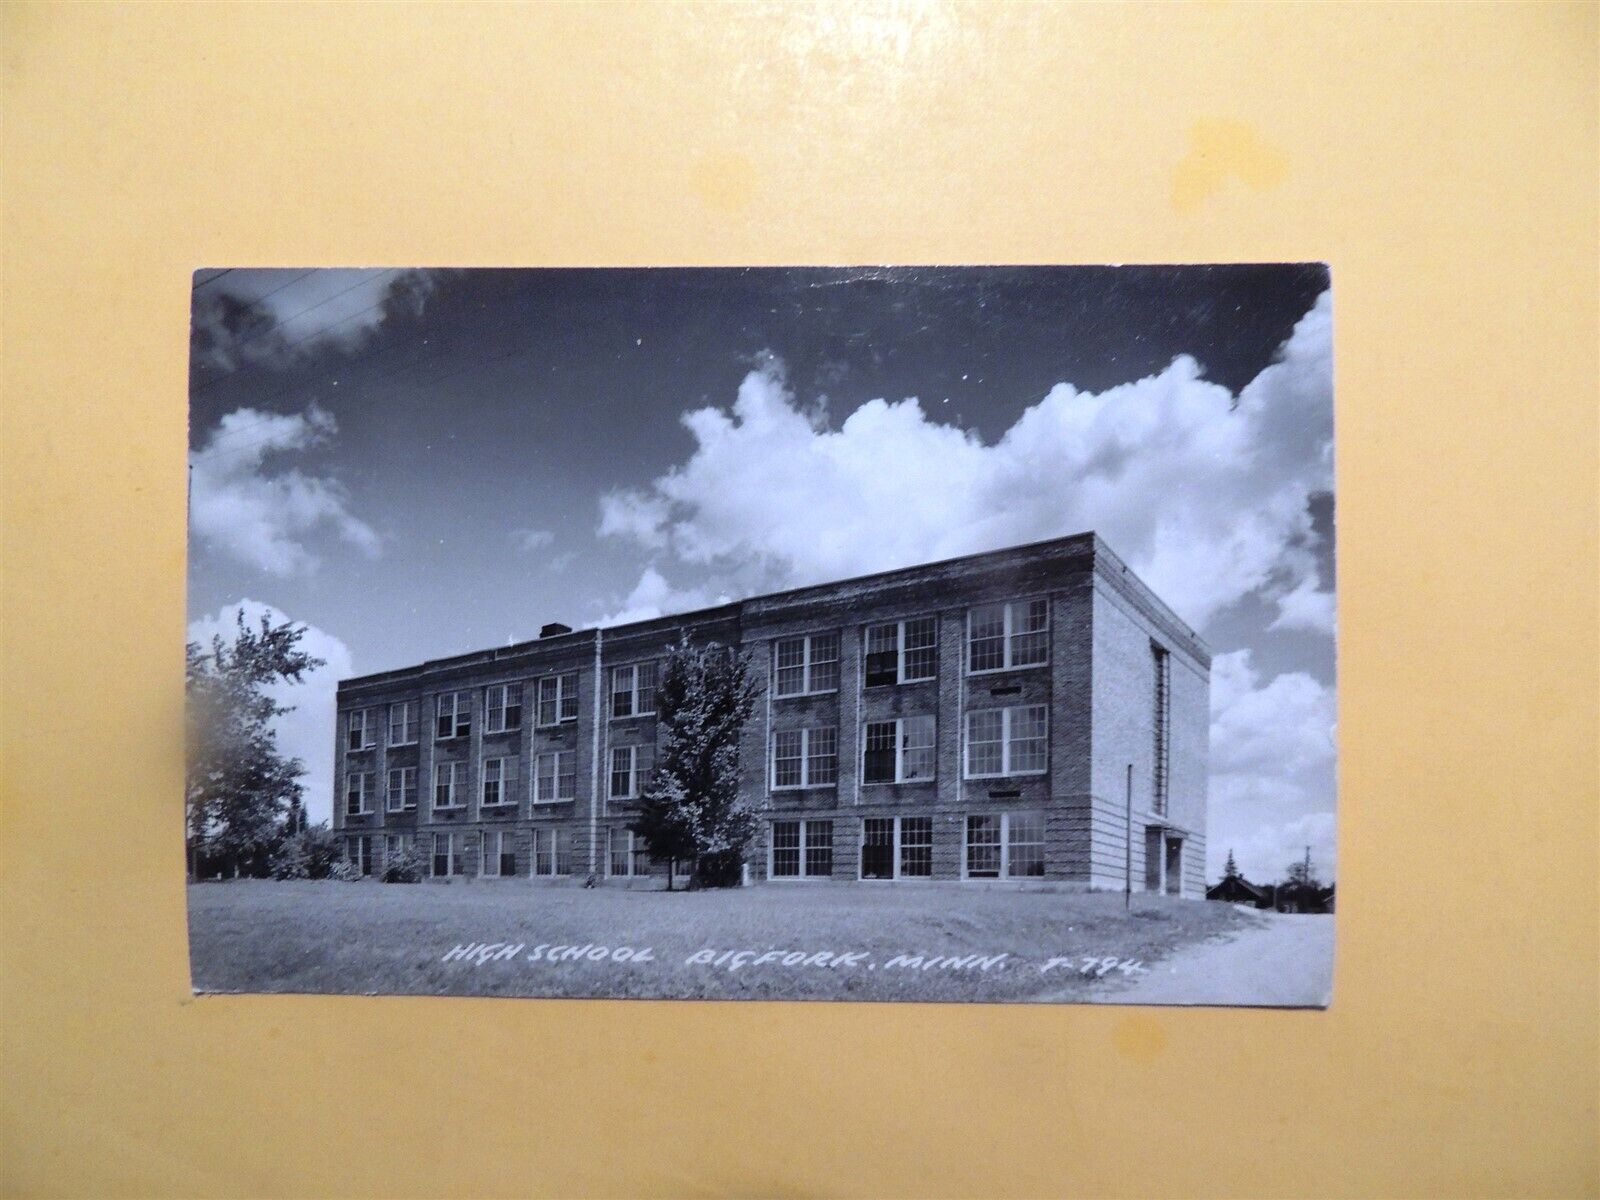 High School Bigfork Minnesota vintage real photo postcard 1953